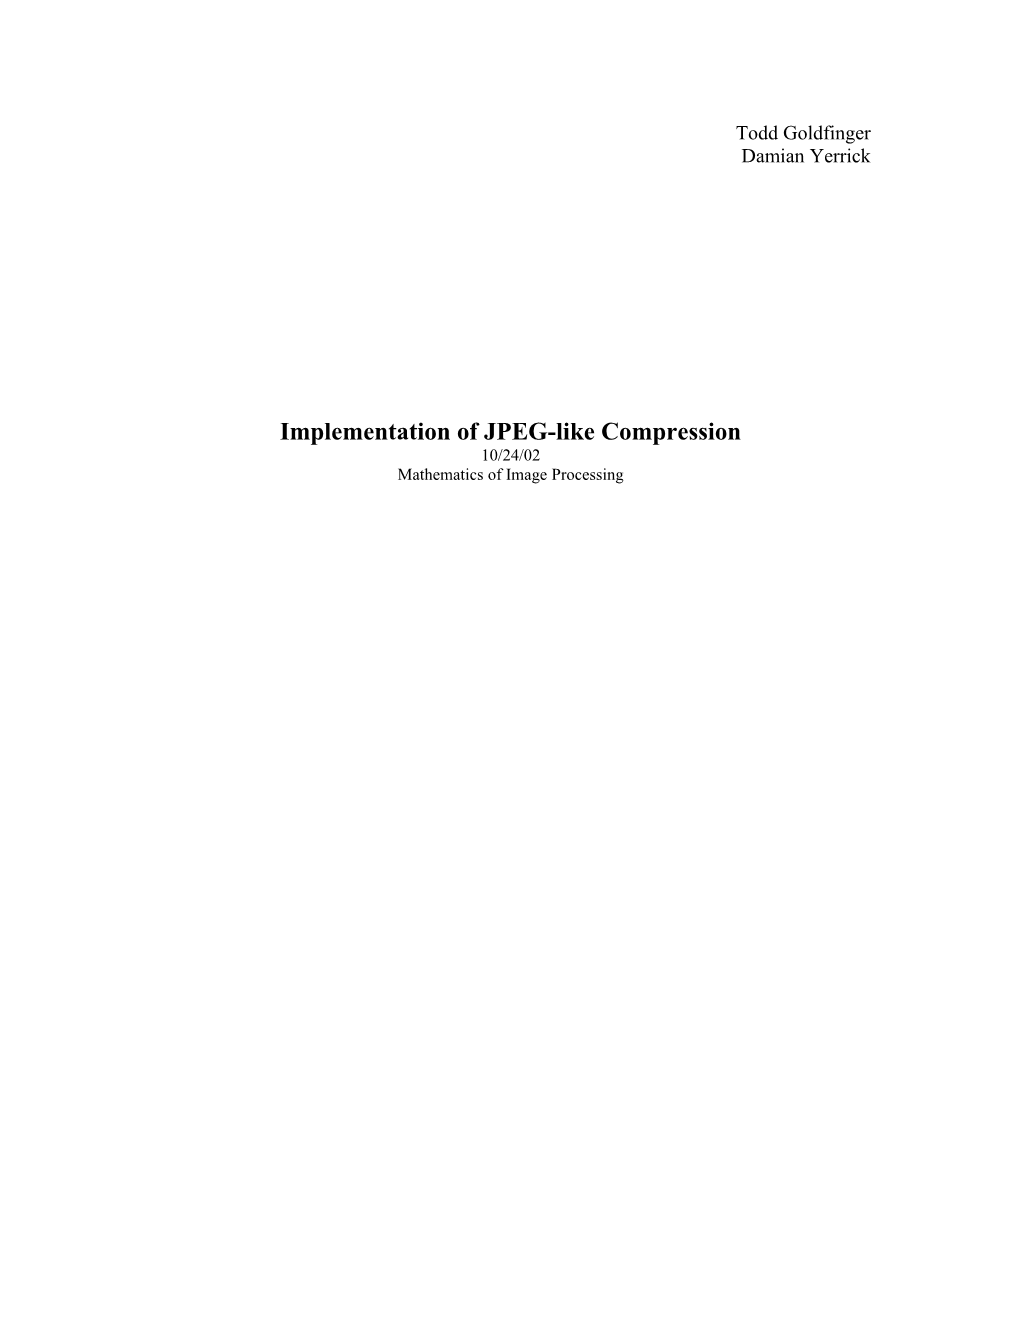 Implementation of JPEG-Like Compression